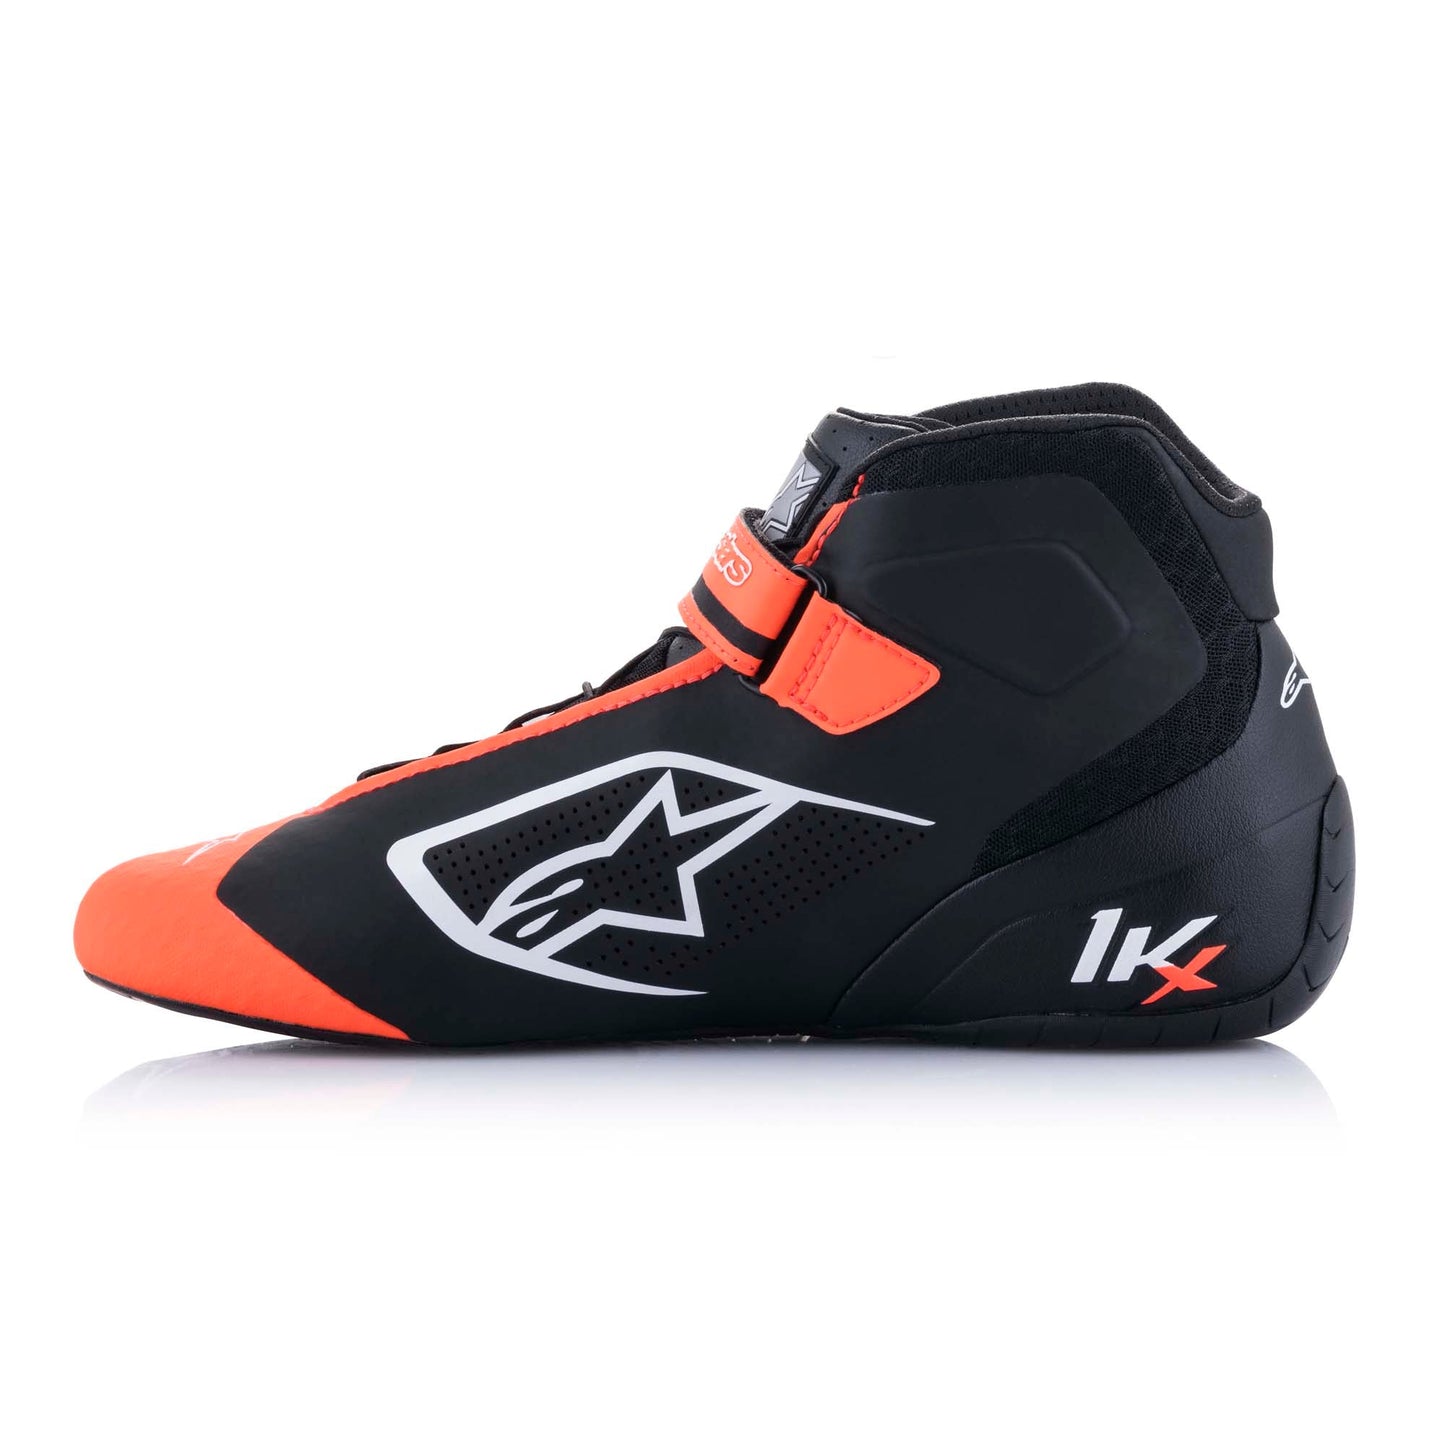 Alpinestars Tech 1-KX Karting Shoes